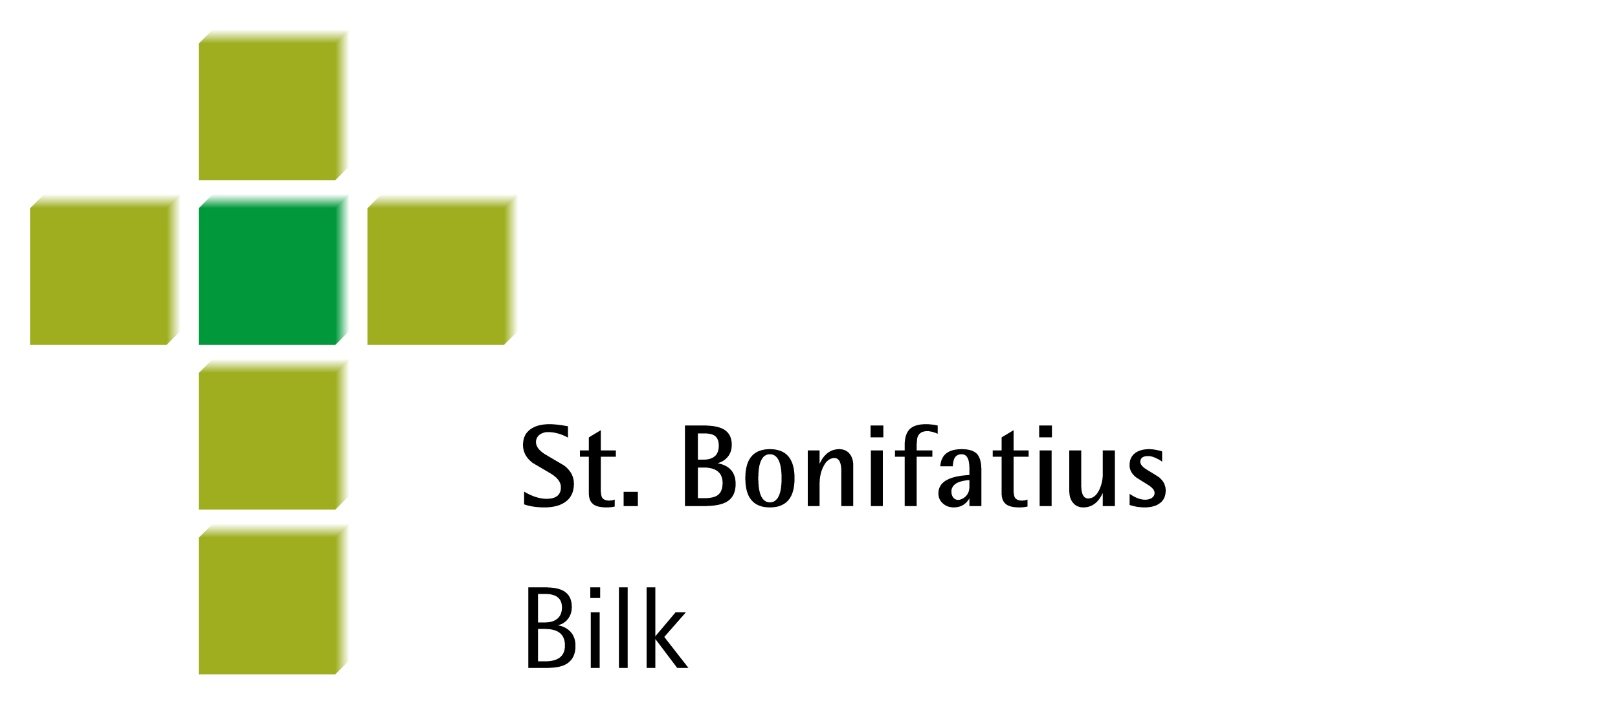 Bonifatius (c) kath. Kirchegemeinde St. Bonifatius Düsseldorf